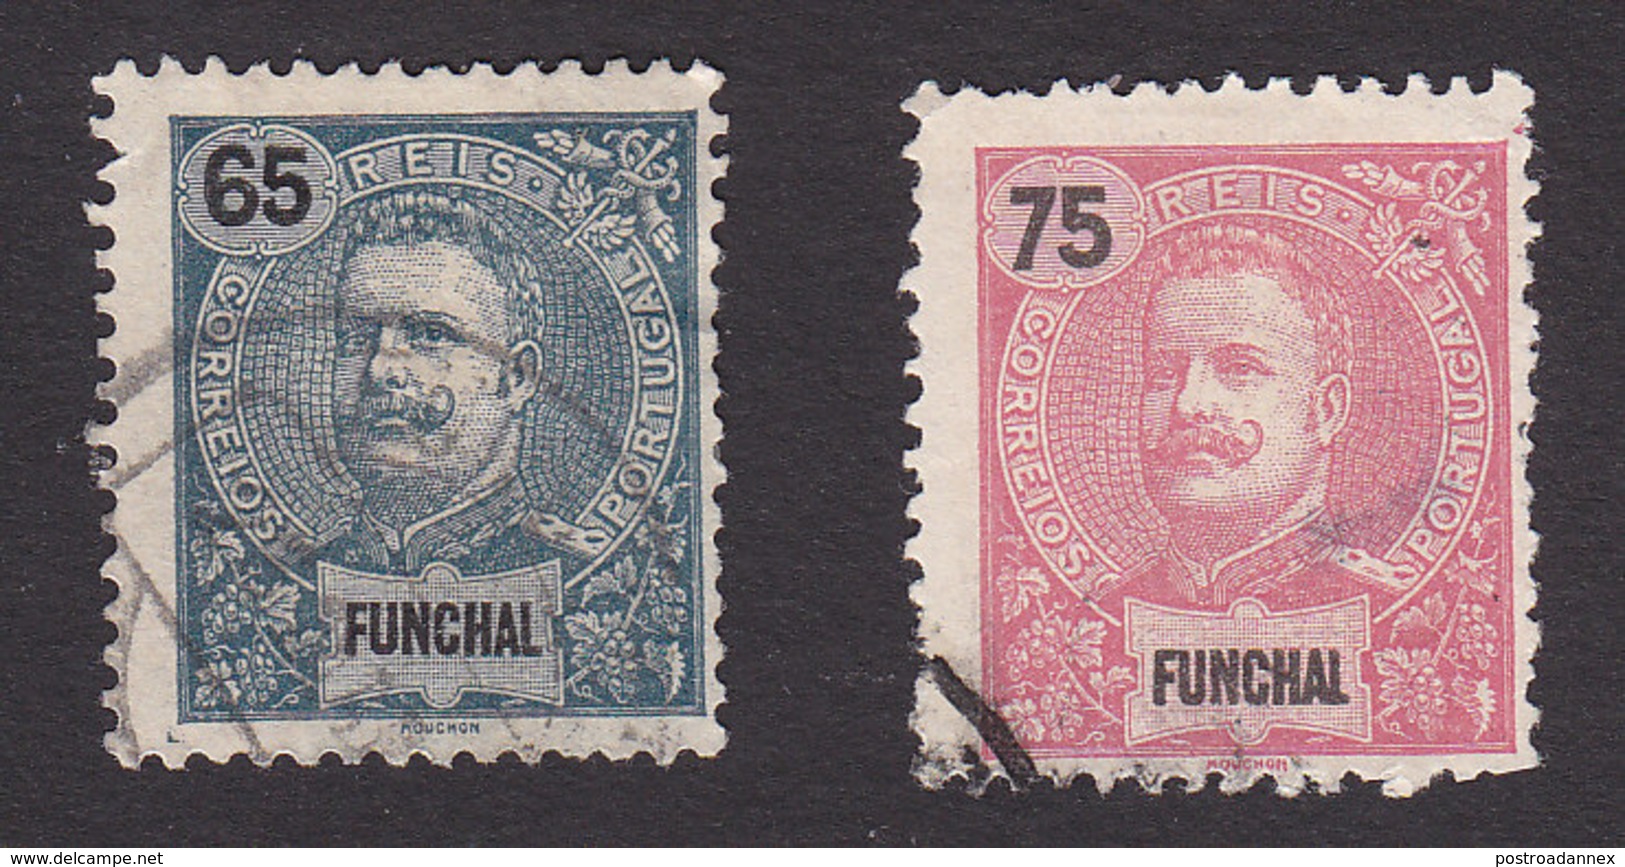 Funchal, Scott #23-24, Used, King Carlos, Issued 1897 - Funchal